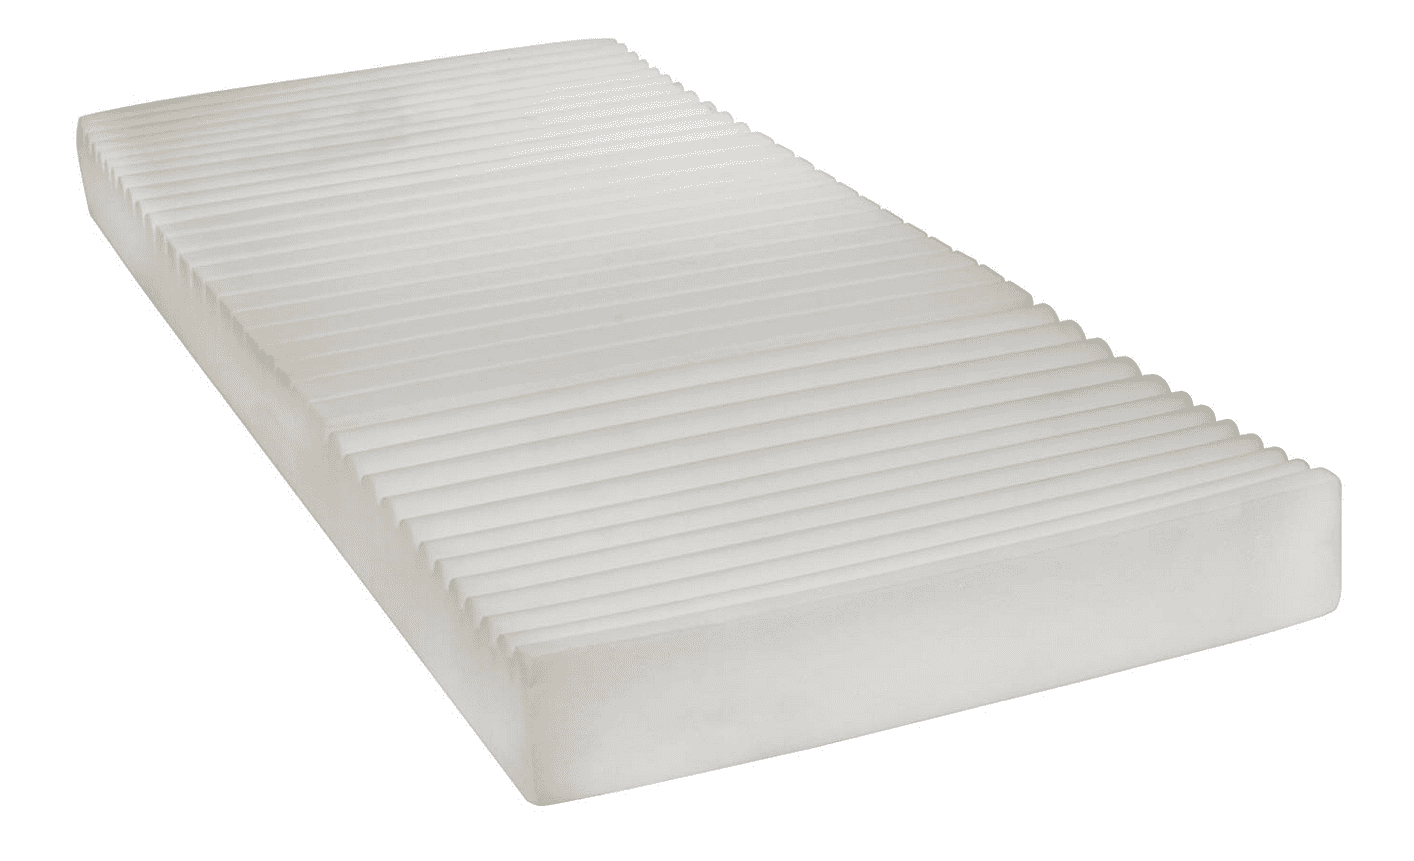 therapeutic 300 count cotton mattress pad